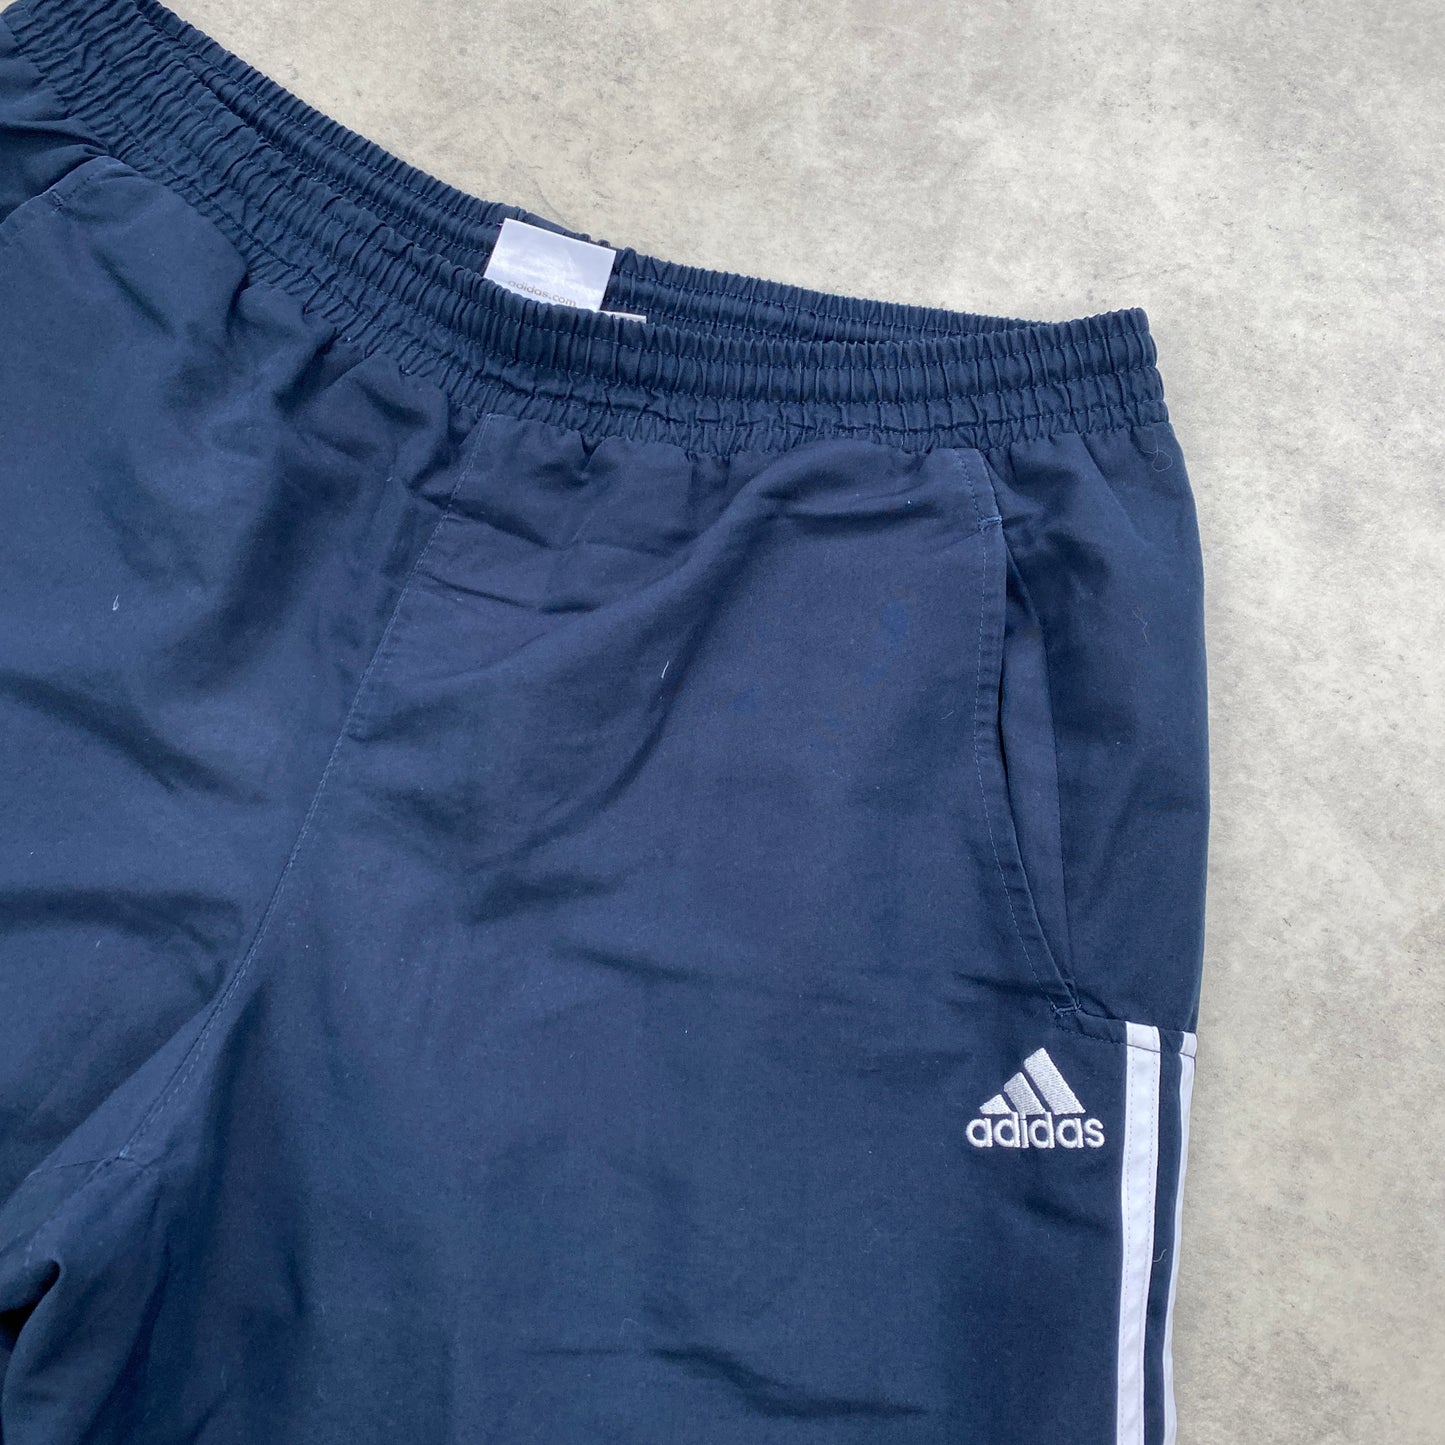 Adidas track pants (XL)